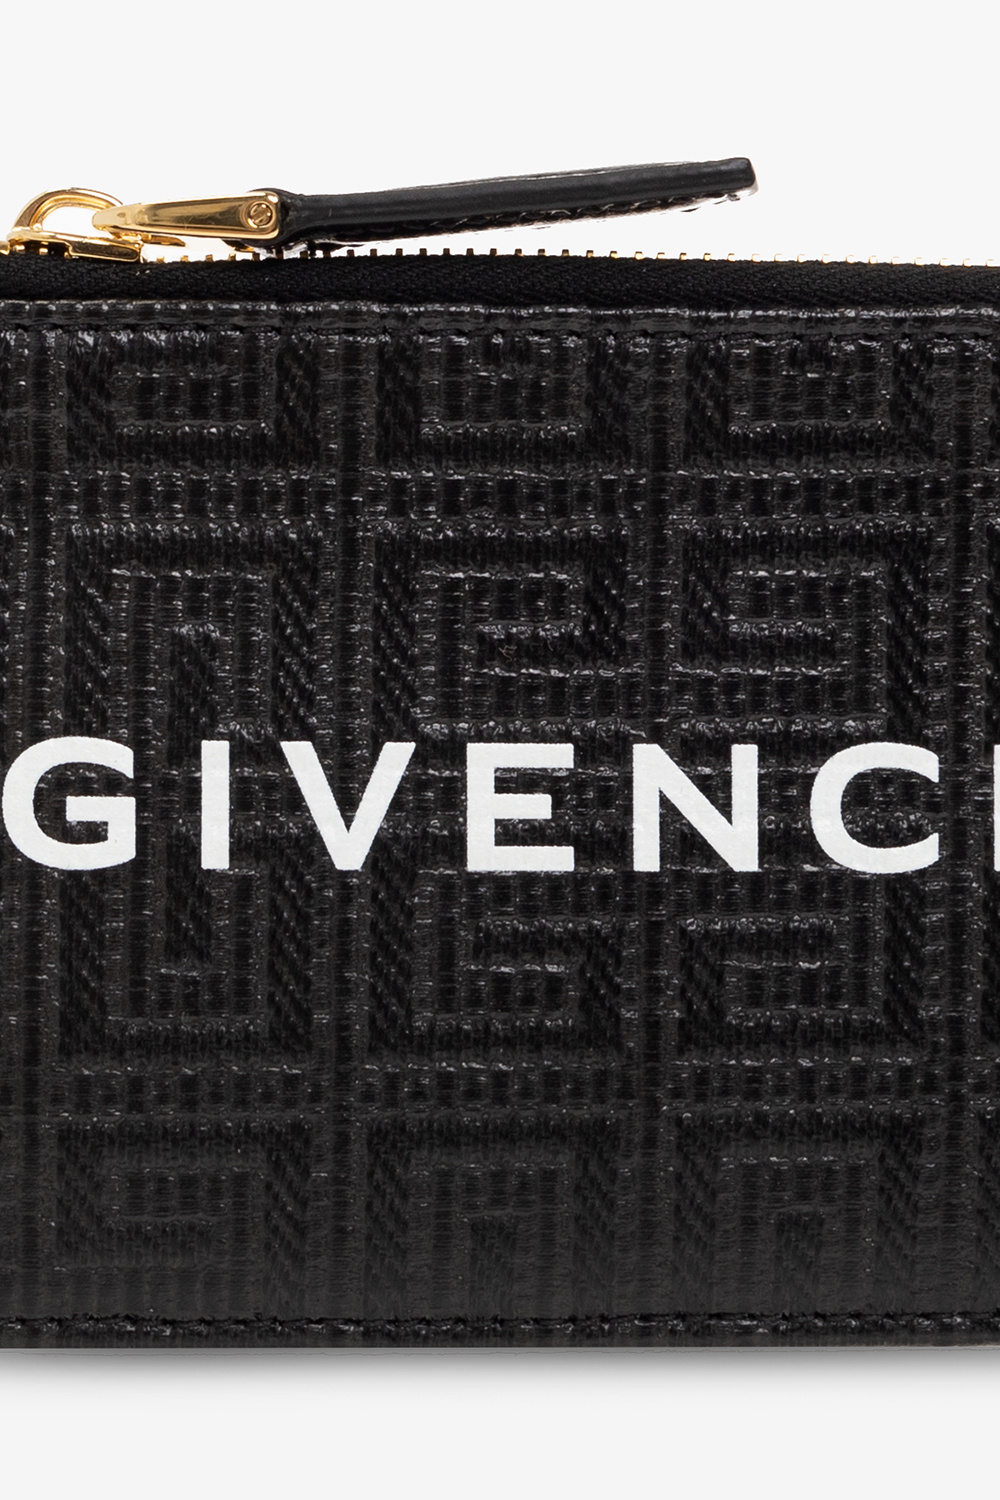 Givenchy GIVENCHY BH005CH0XV 029